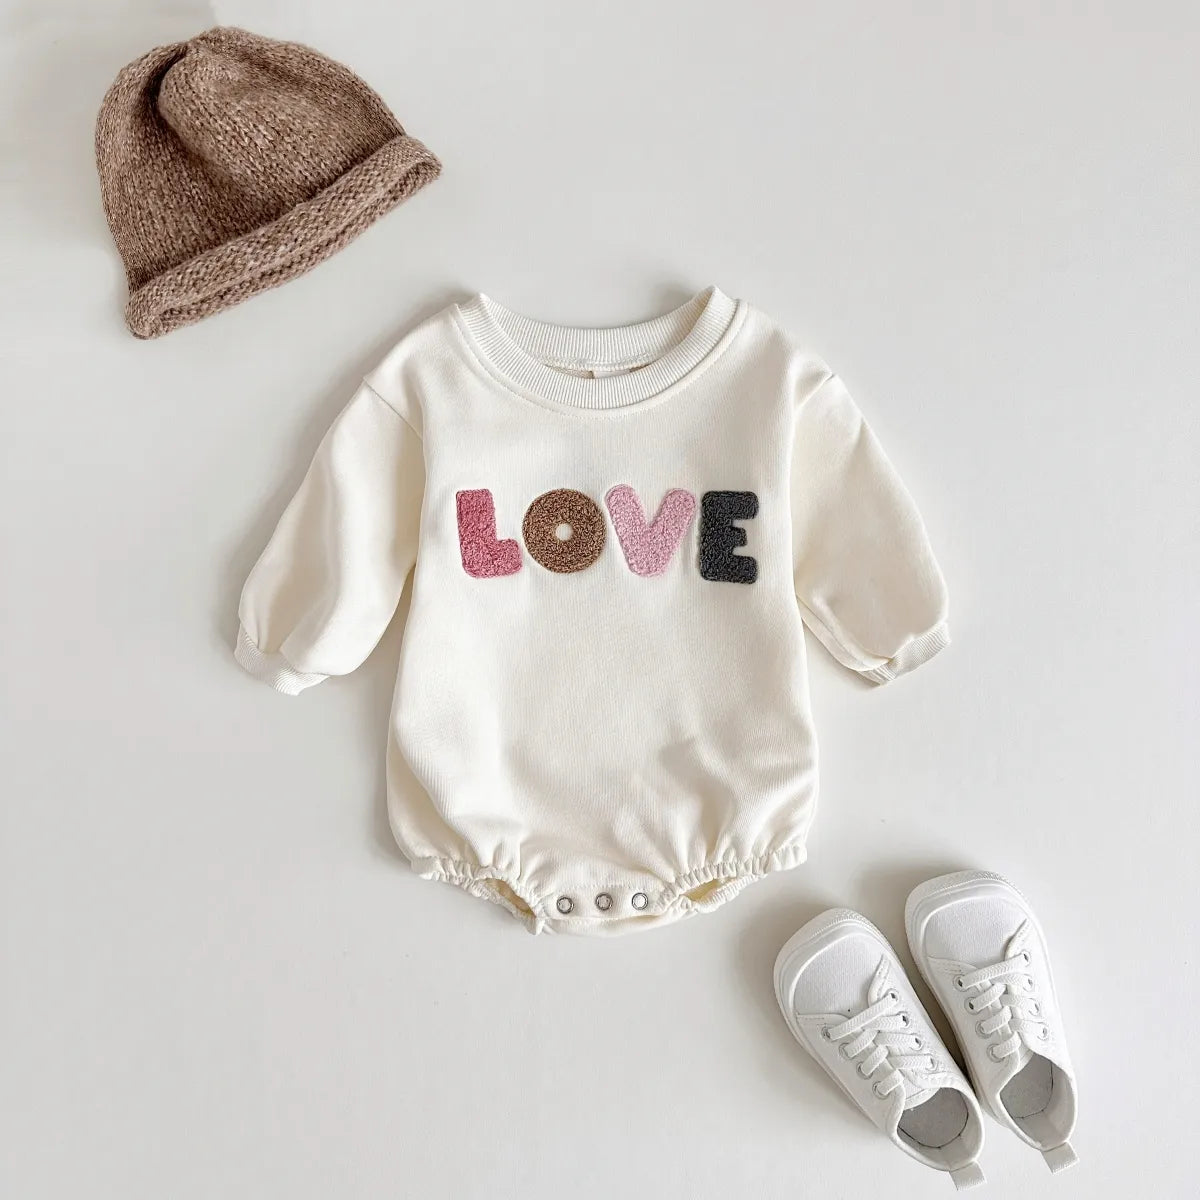 Baby LOVE Embroidery Sweatshirt Romper